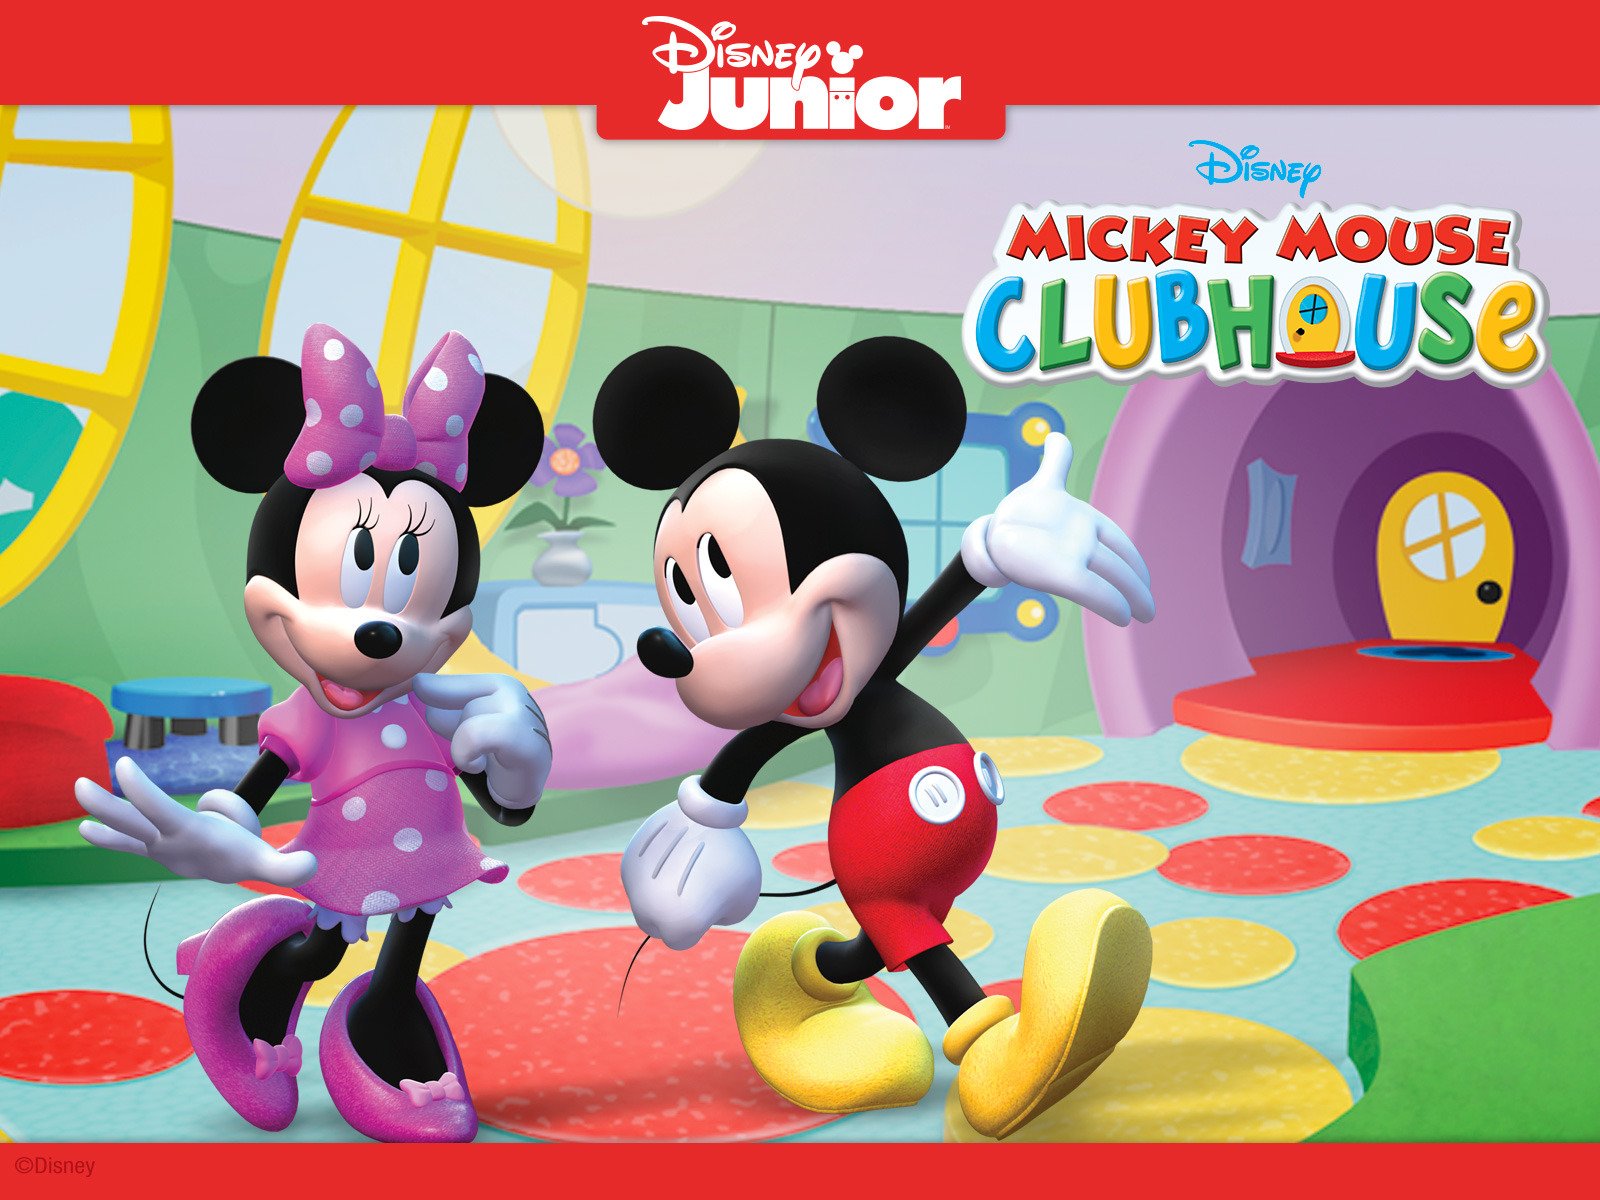 Mickey mouse clubhouse season 2 episode wiki